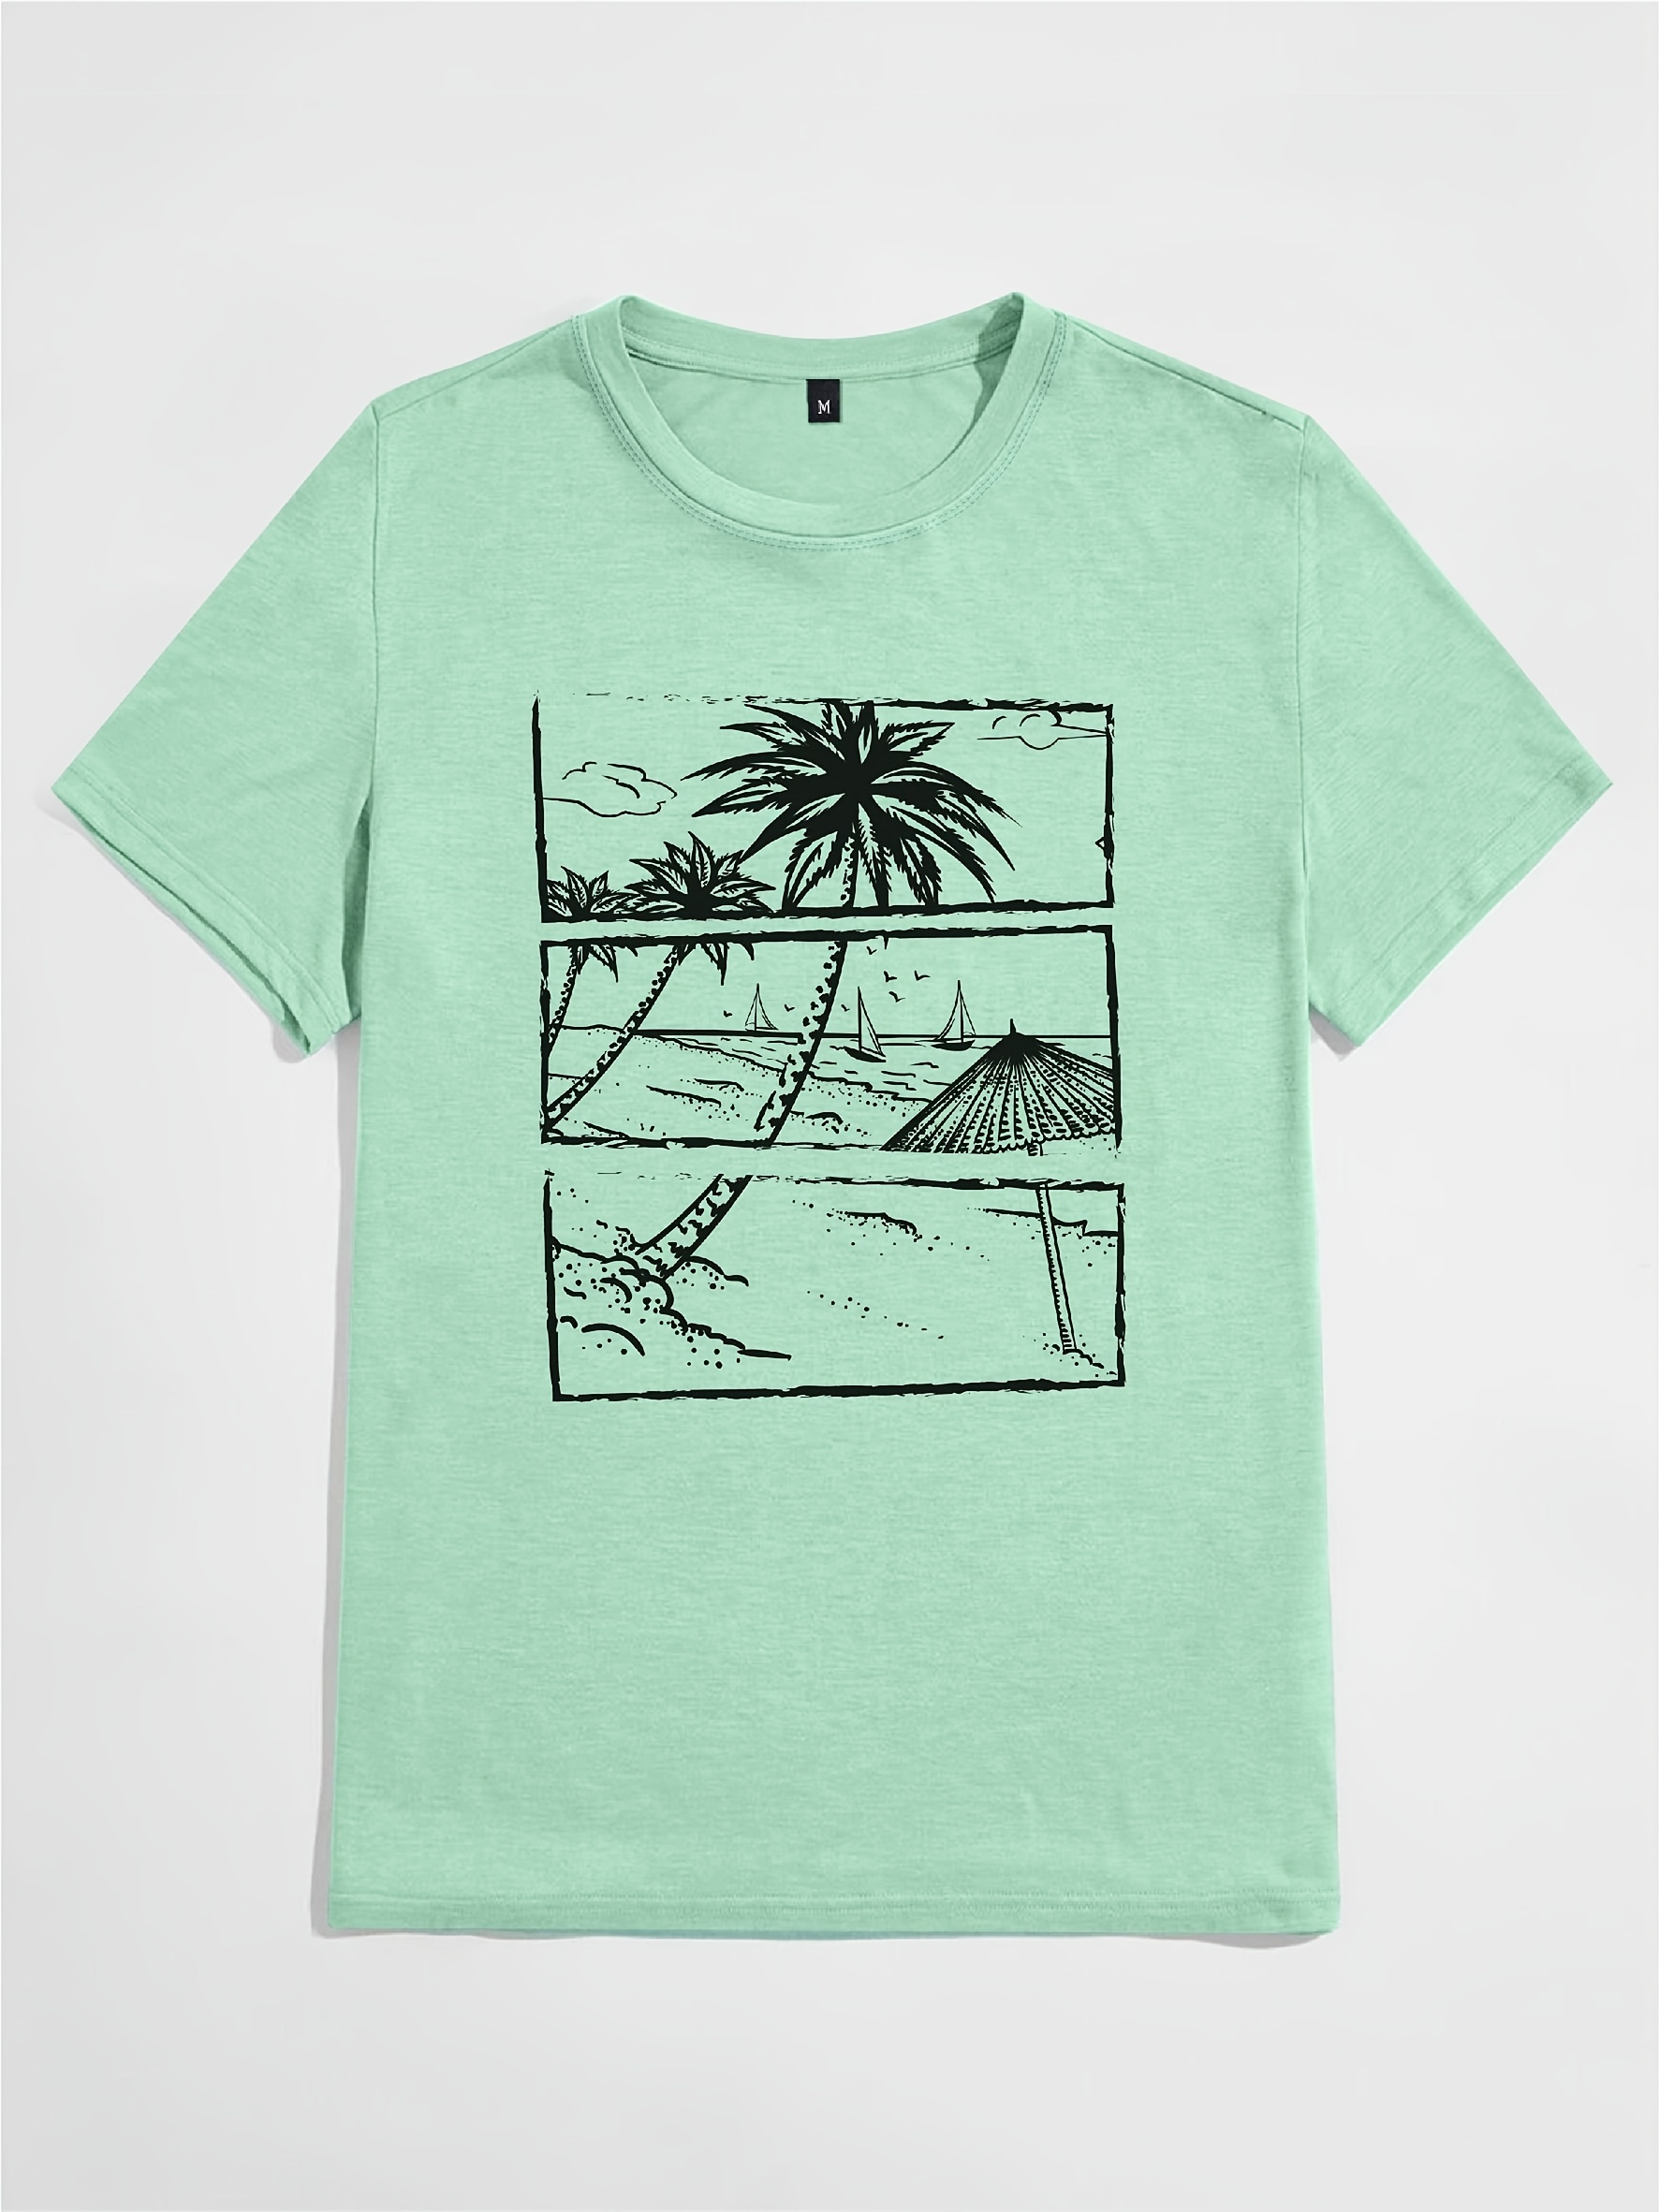 hawaiian beach round neck graphic t shirts causal tees short sleeves comfortable tops mens summer clothing details 4